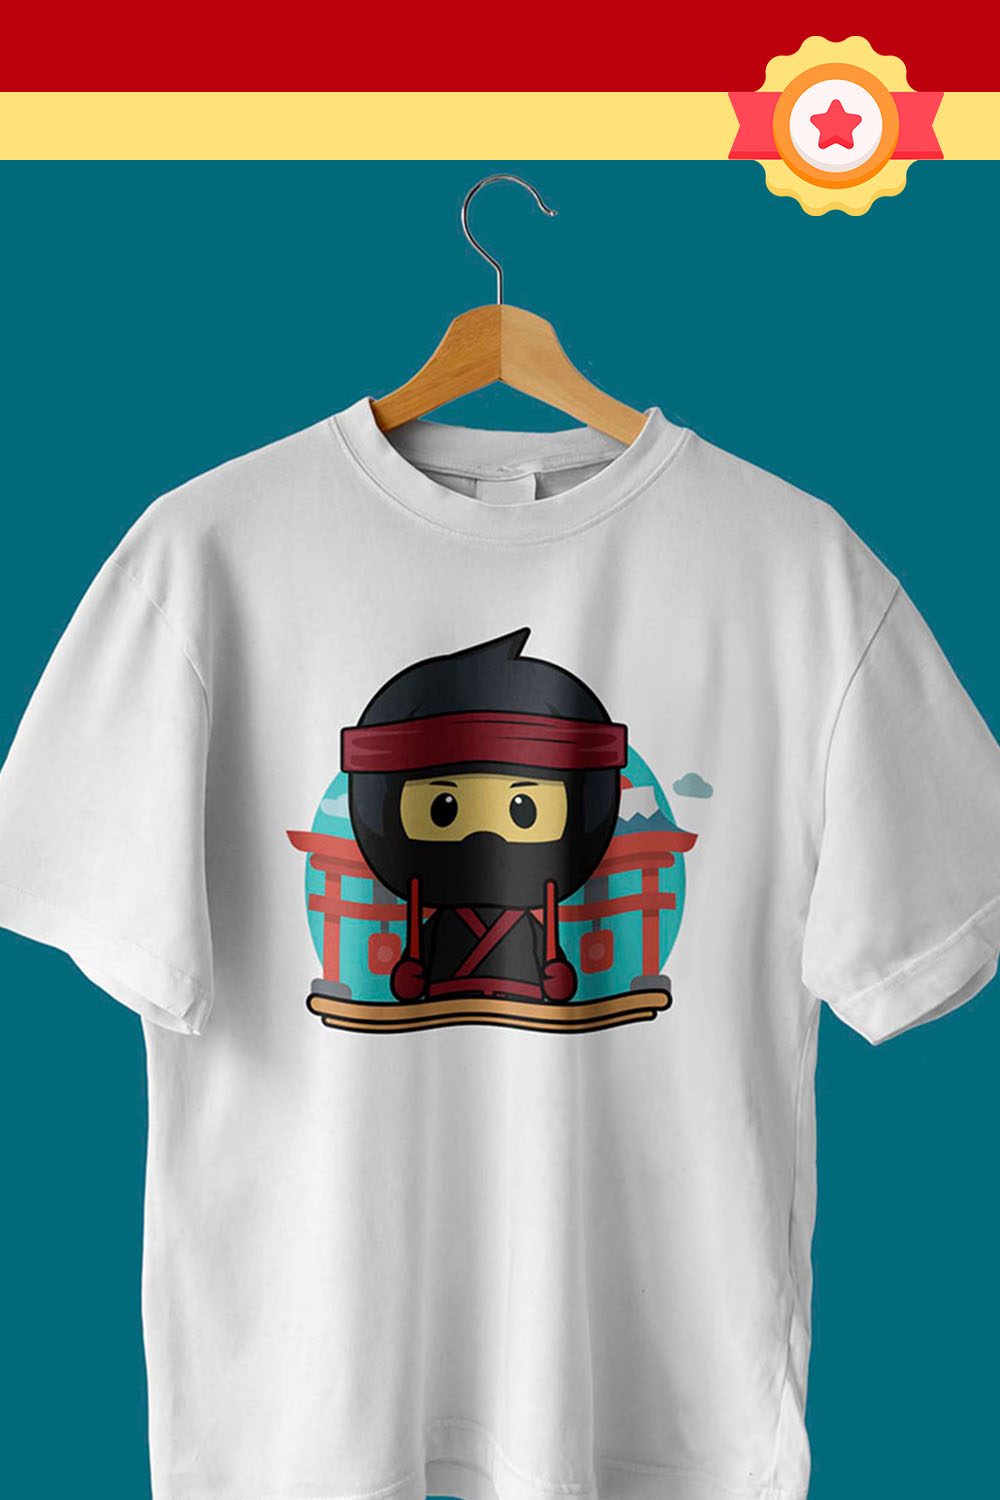 Ninja Eat T-shirt Design Pinterest collage image.